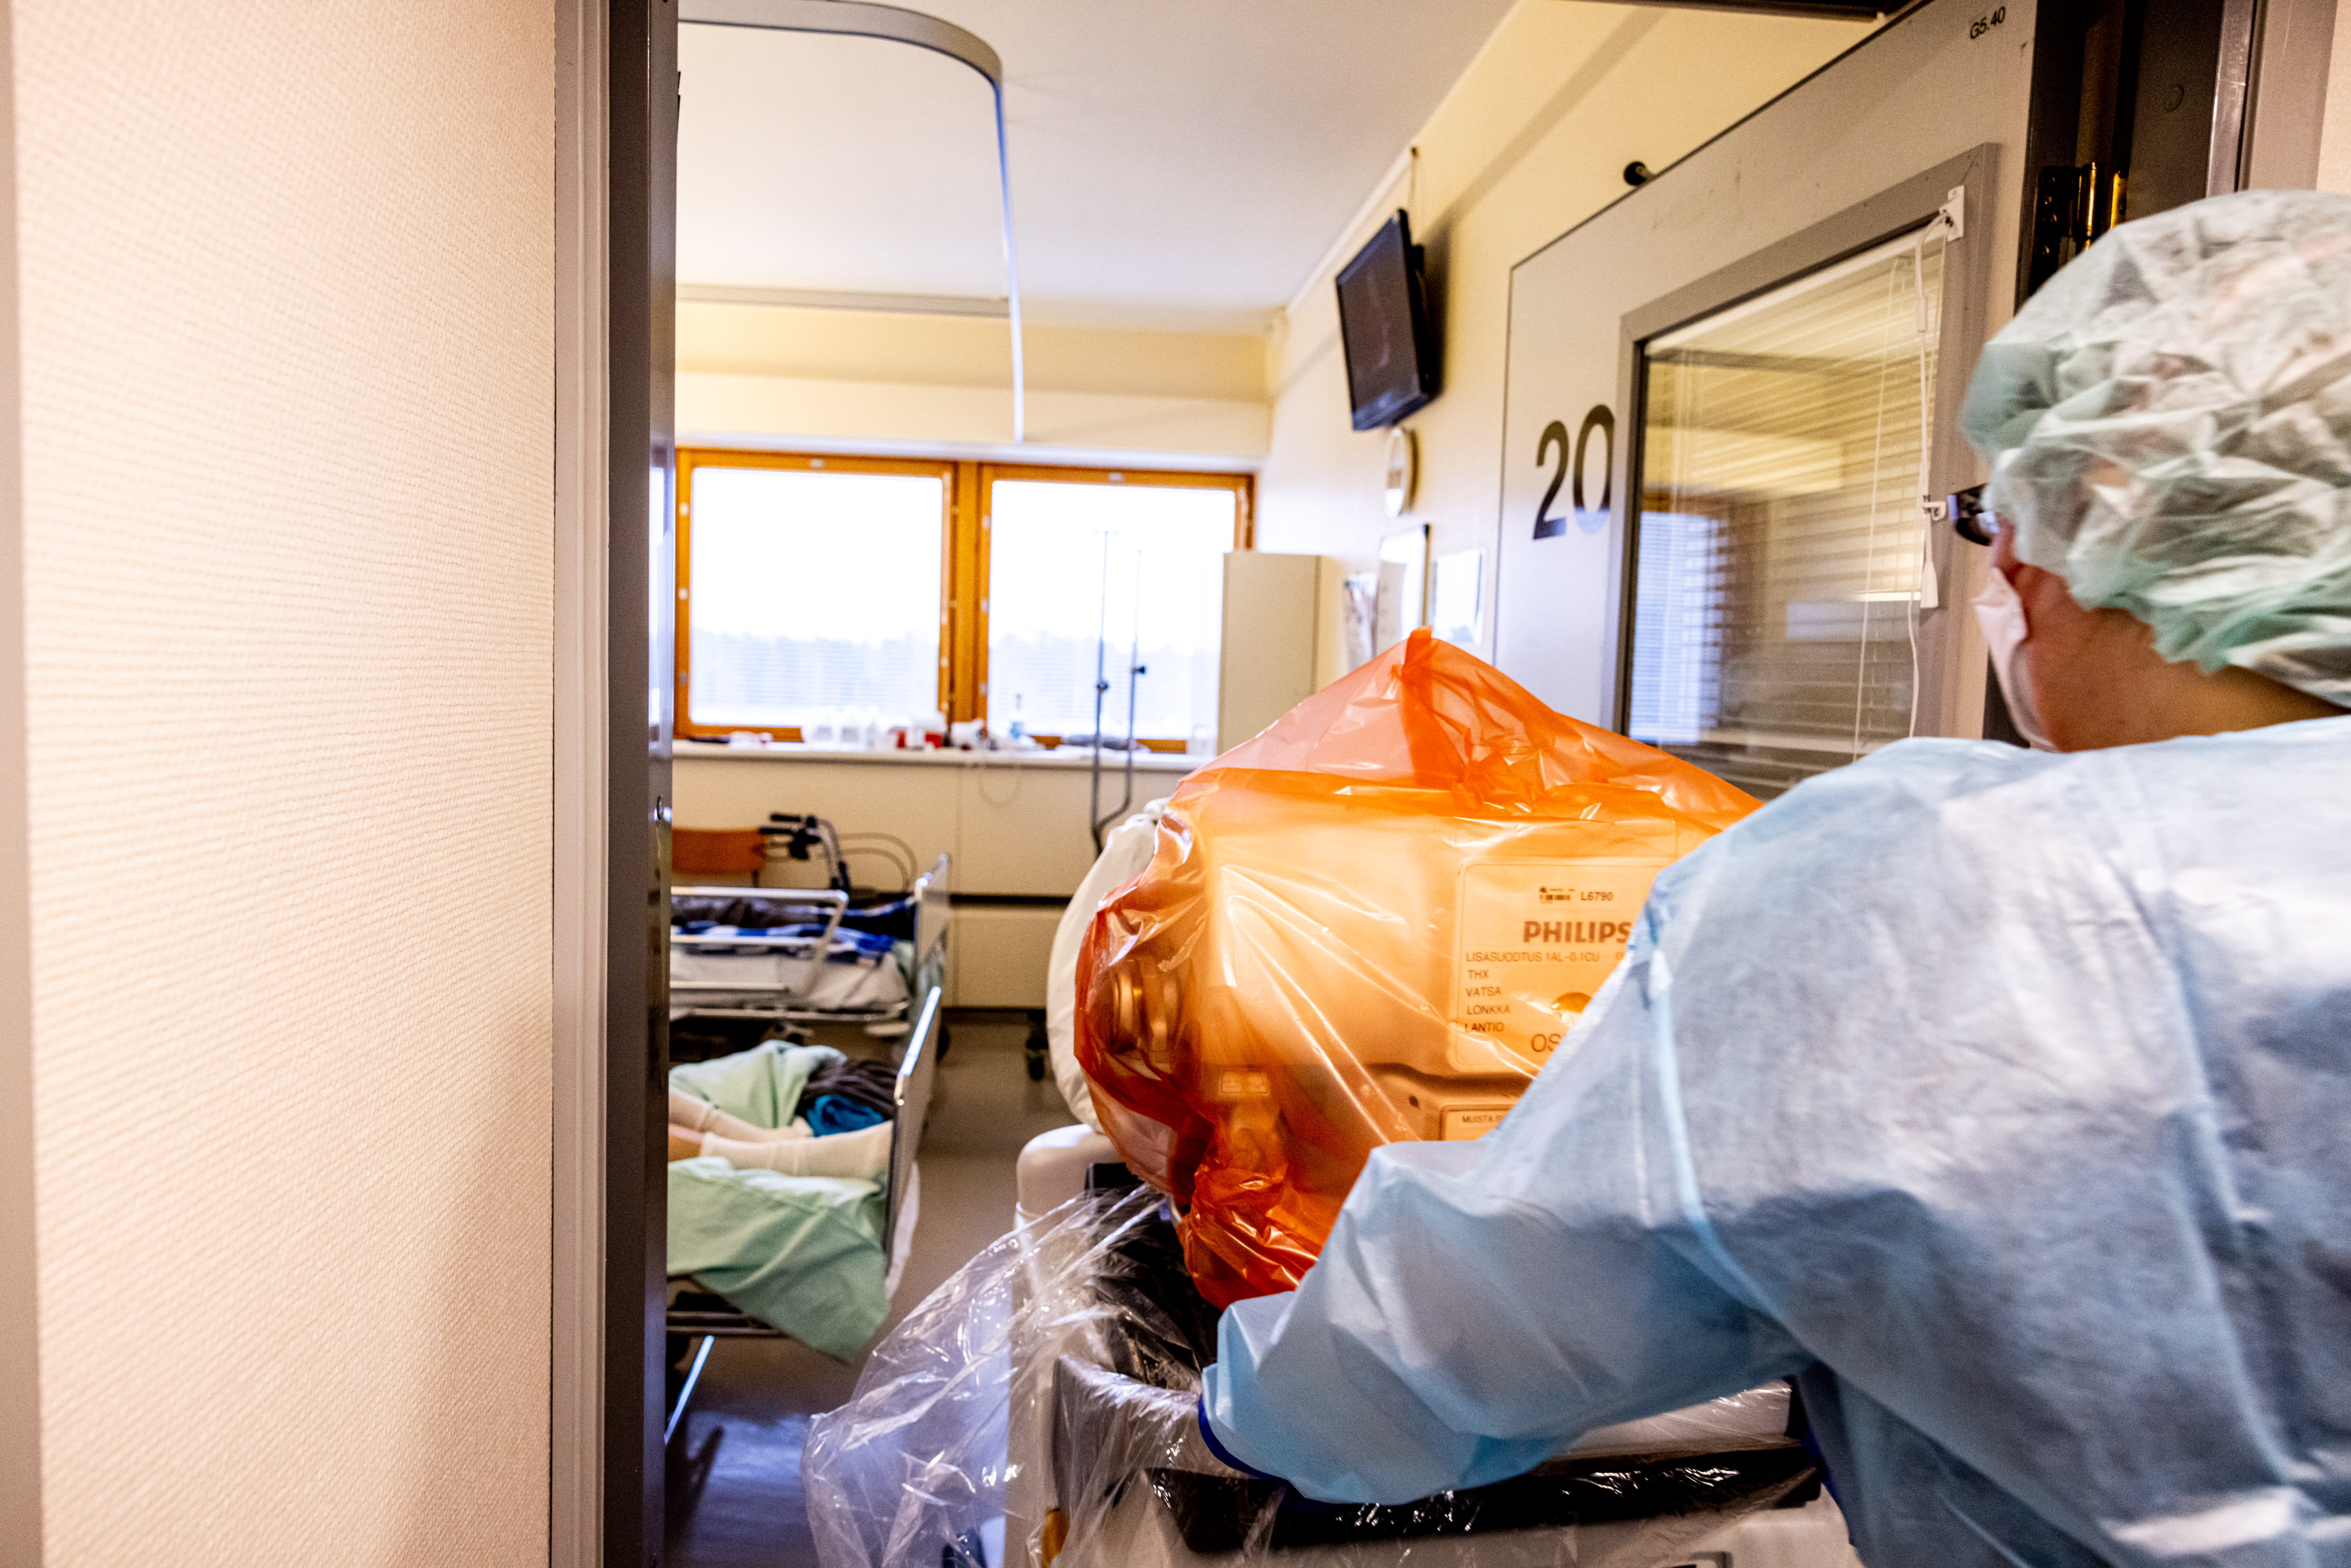 “Random” Covid adds strain to Finnish hospitals